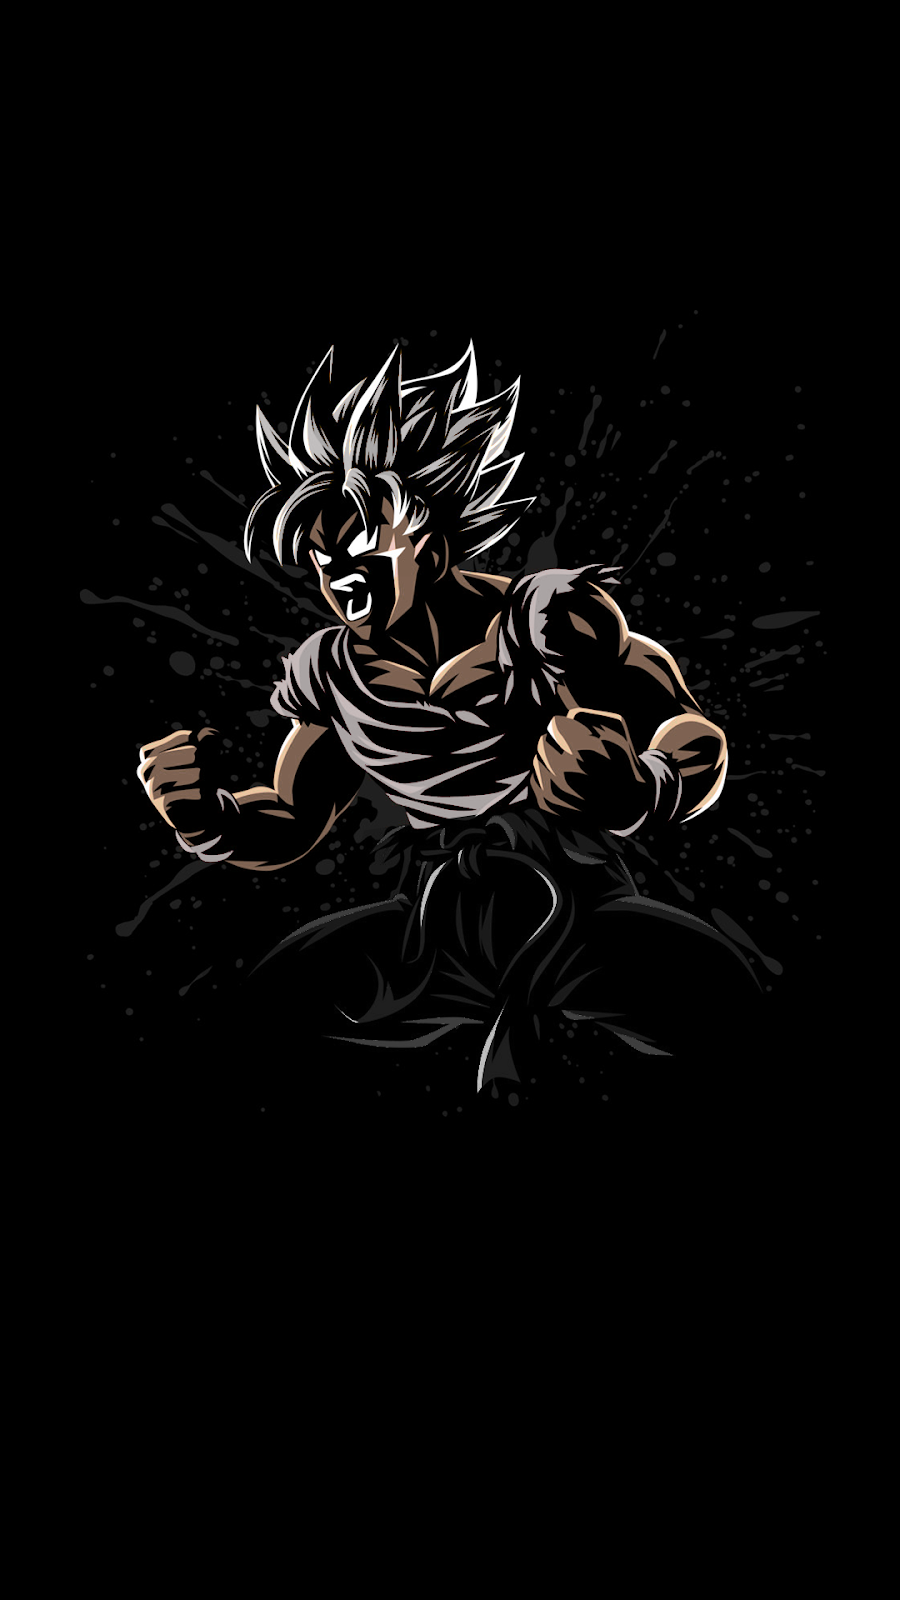 Black Goku - Android, iPhone, Desktop HD Backgrounds / Wallpapers